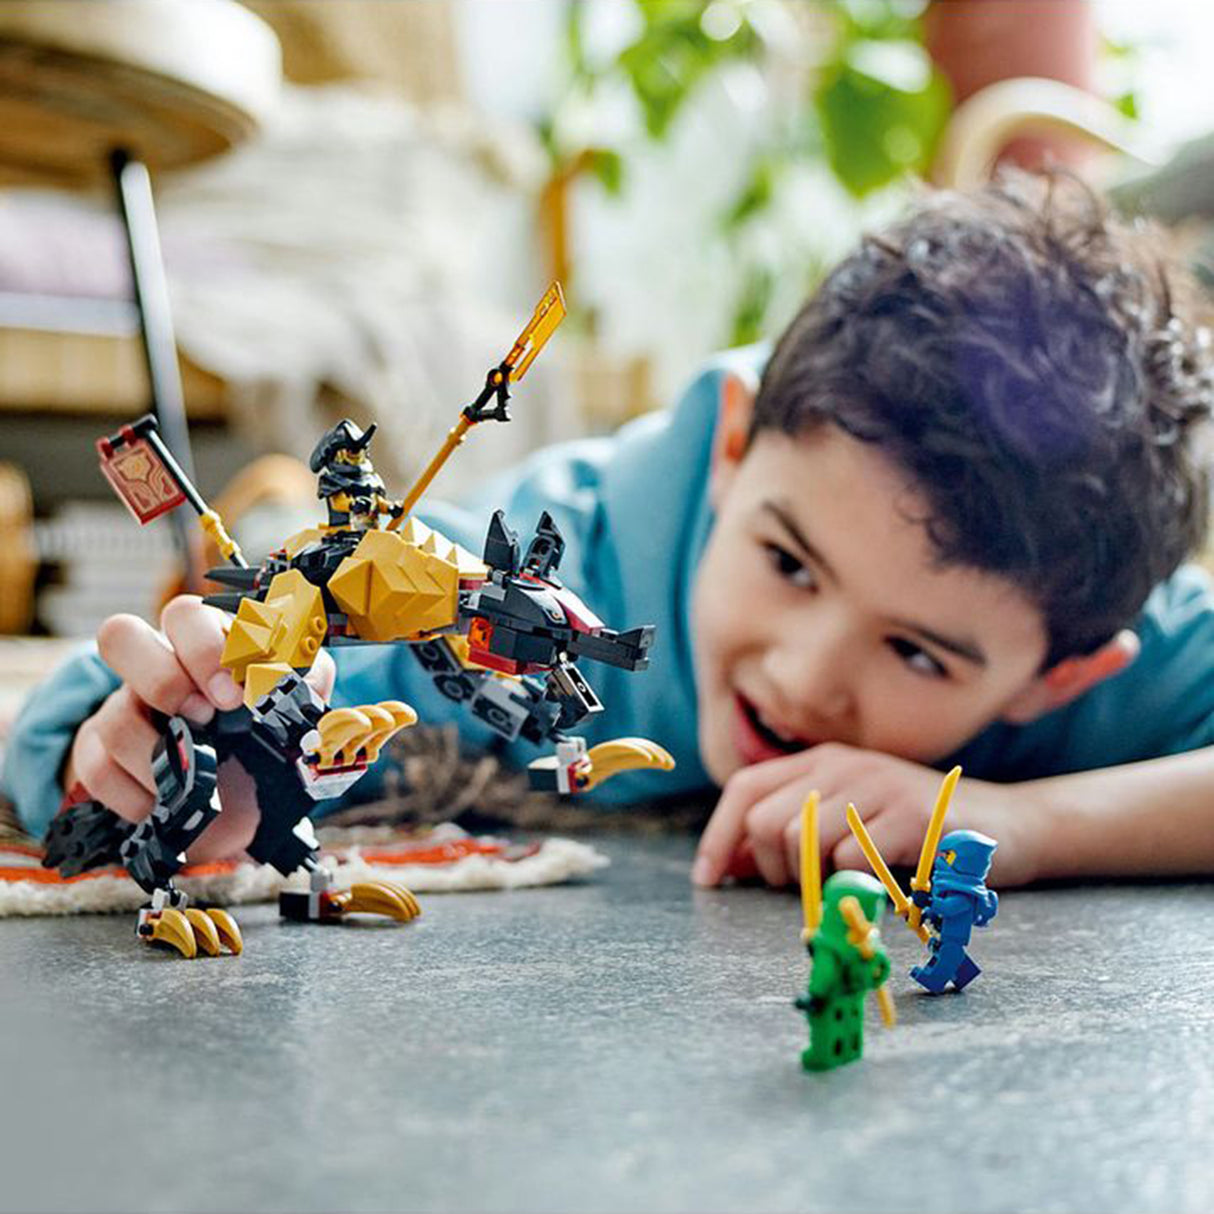 LEGO Ninjago Imperium Dragon Hunter Hound 71790 (198 pieces)